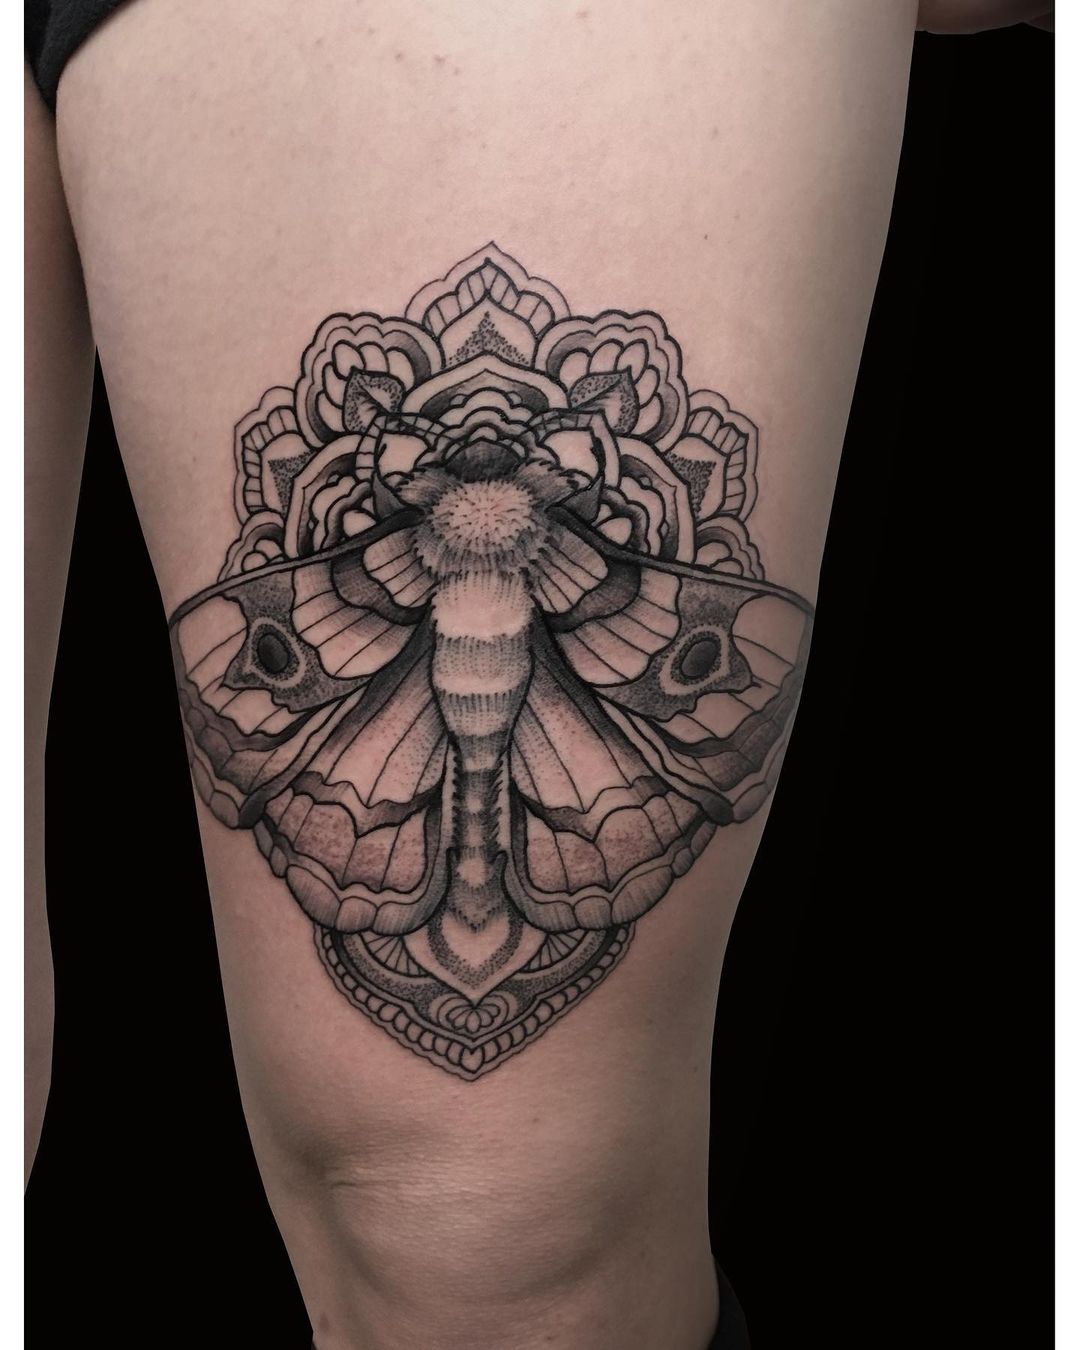 Motte von @charlotte.euskirchen 
.
.
.

#tatts #tattooed #finelinetattoo #blackt